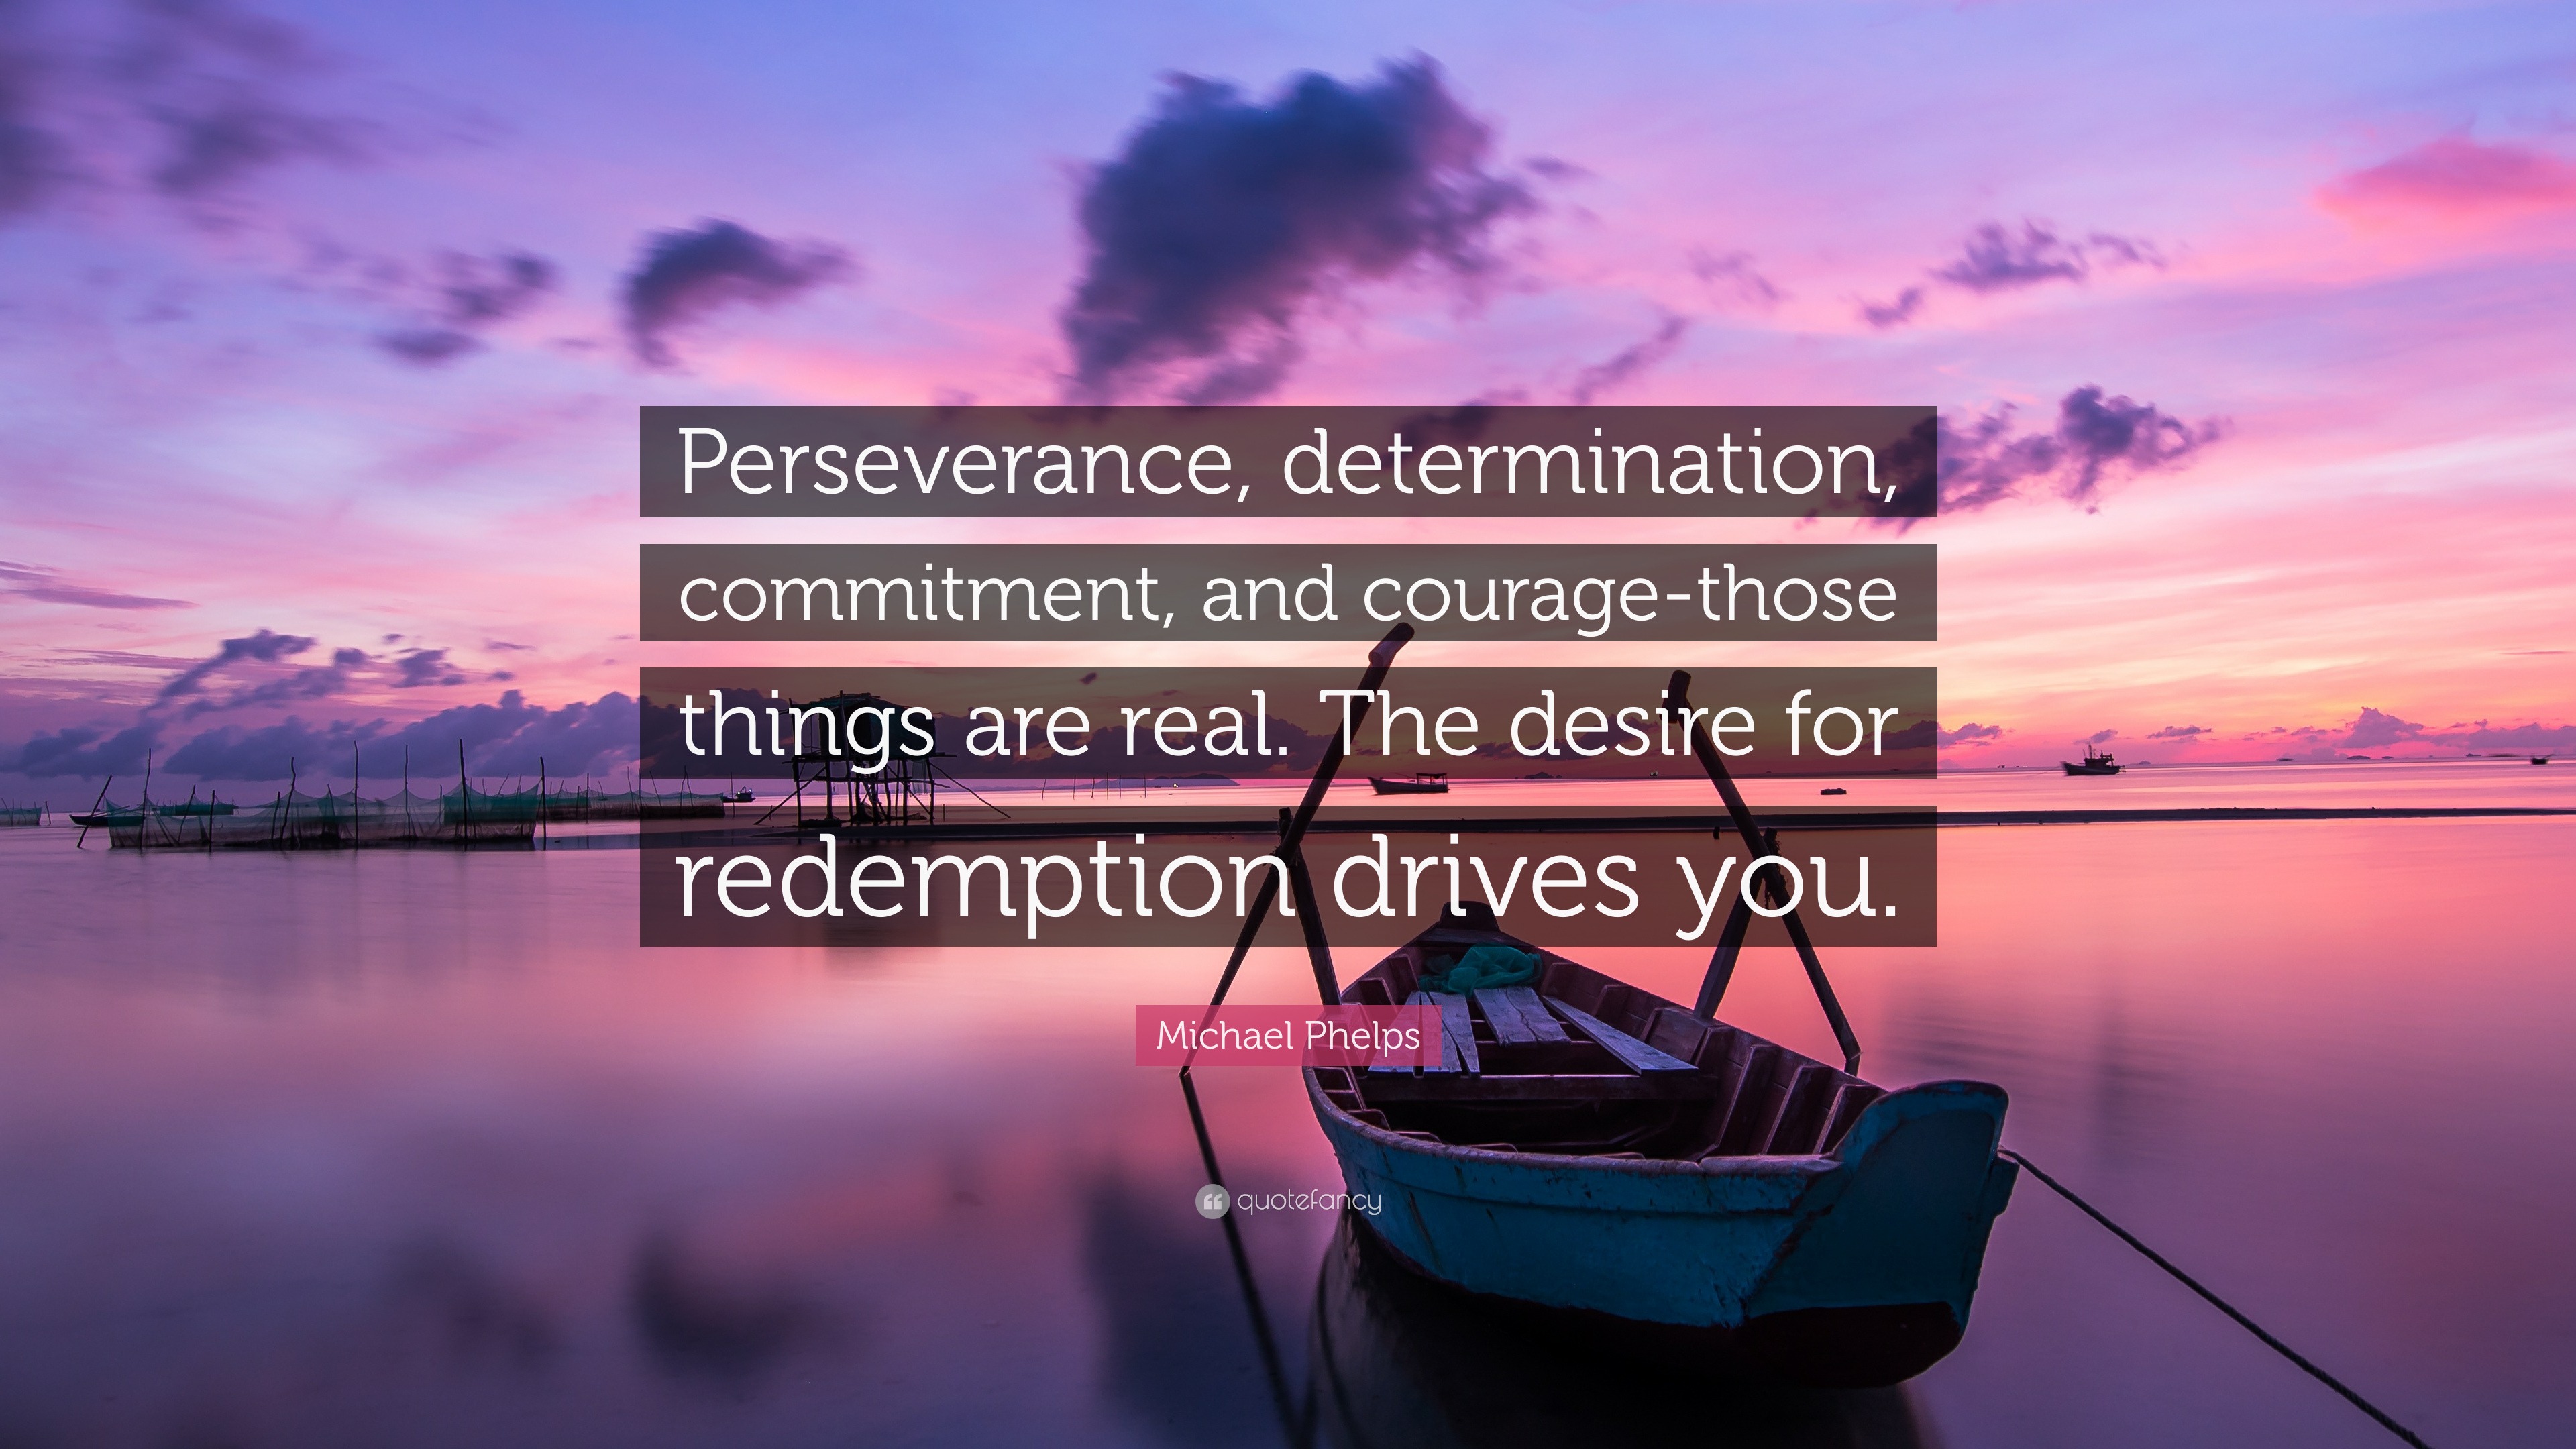 Michael Phelps Quote “Perseverance, determination